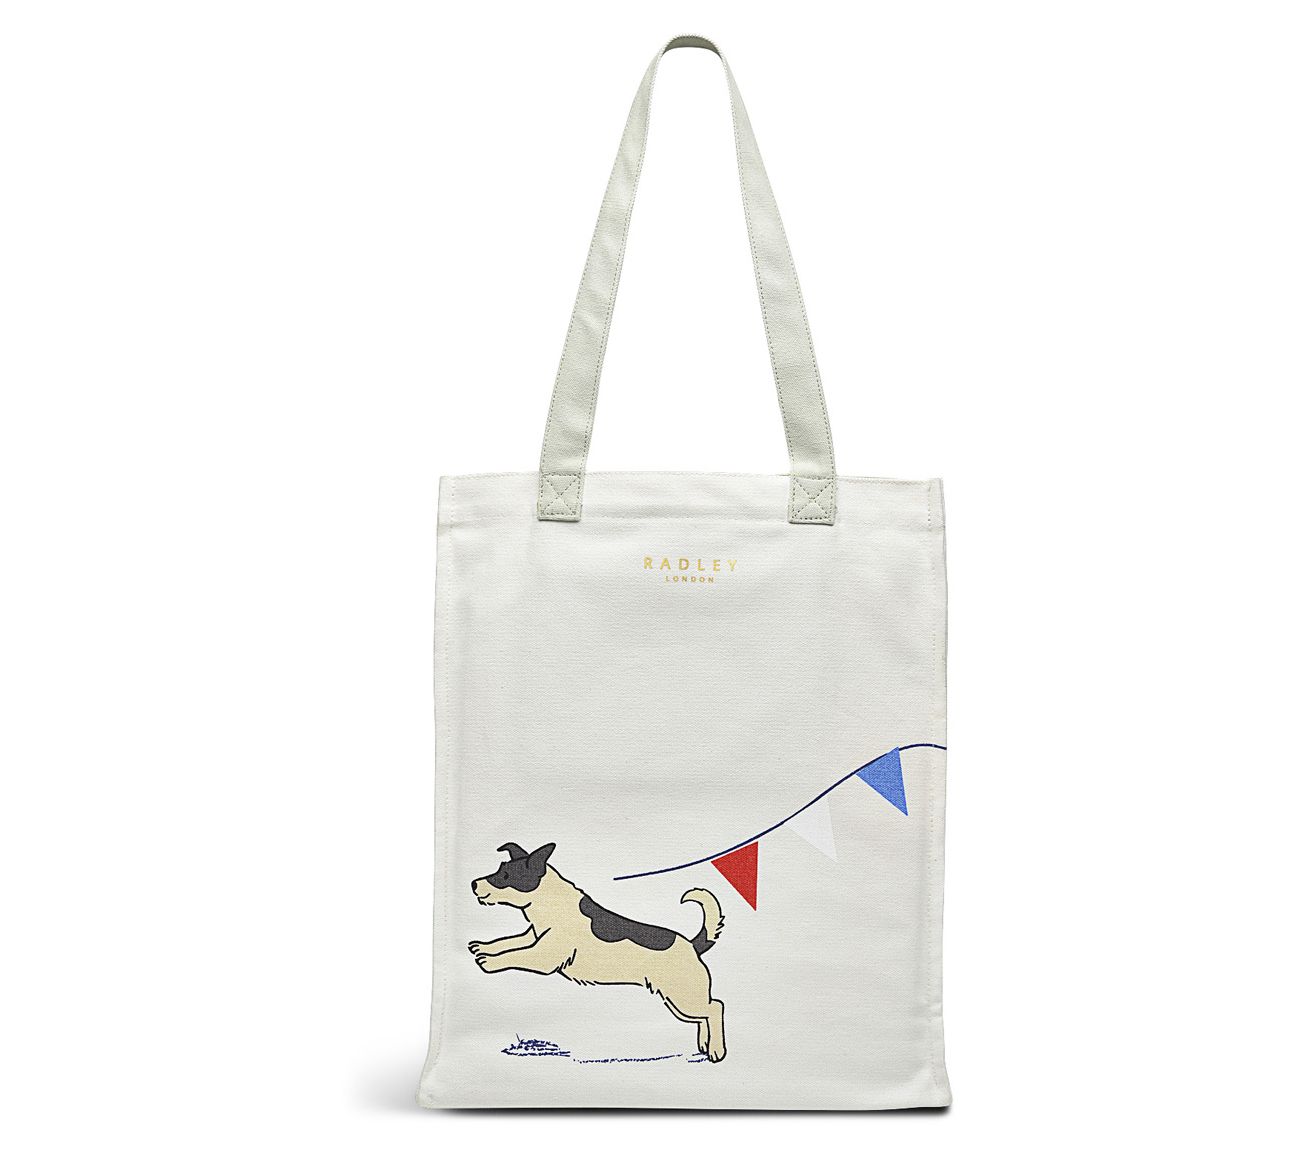 RADLEY+London+Medium+Canvas+Tote+Shopping+Bag for sale online